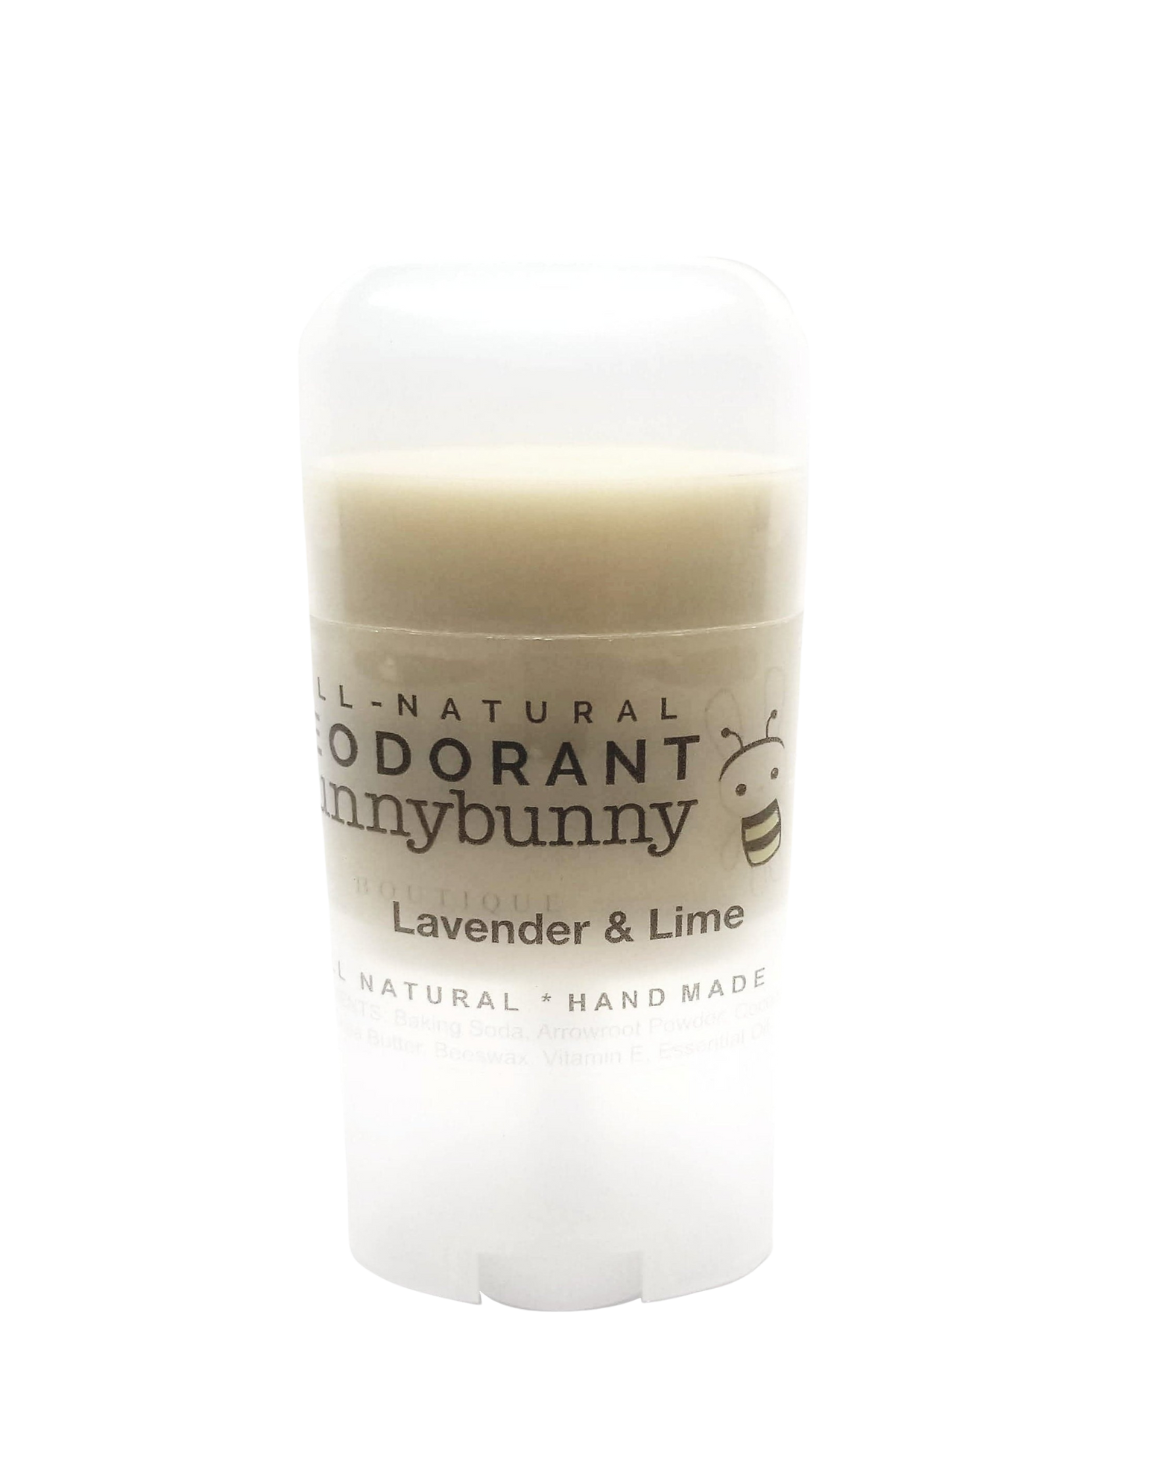 All-Natural Deodorant